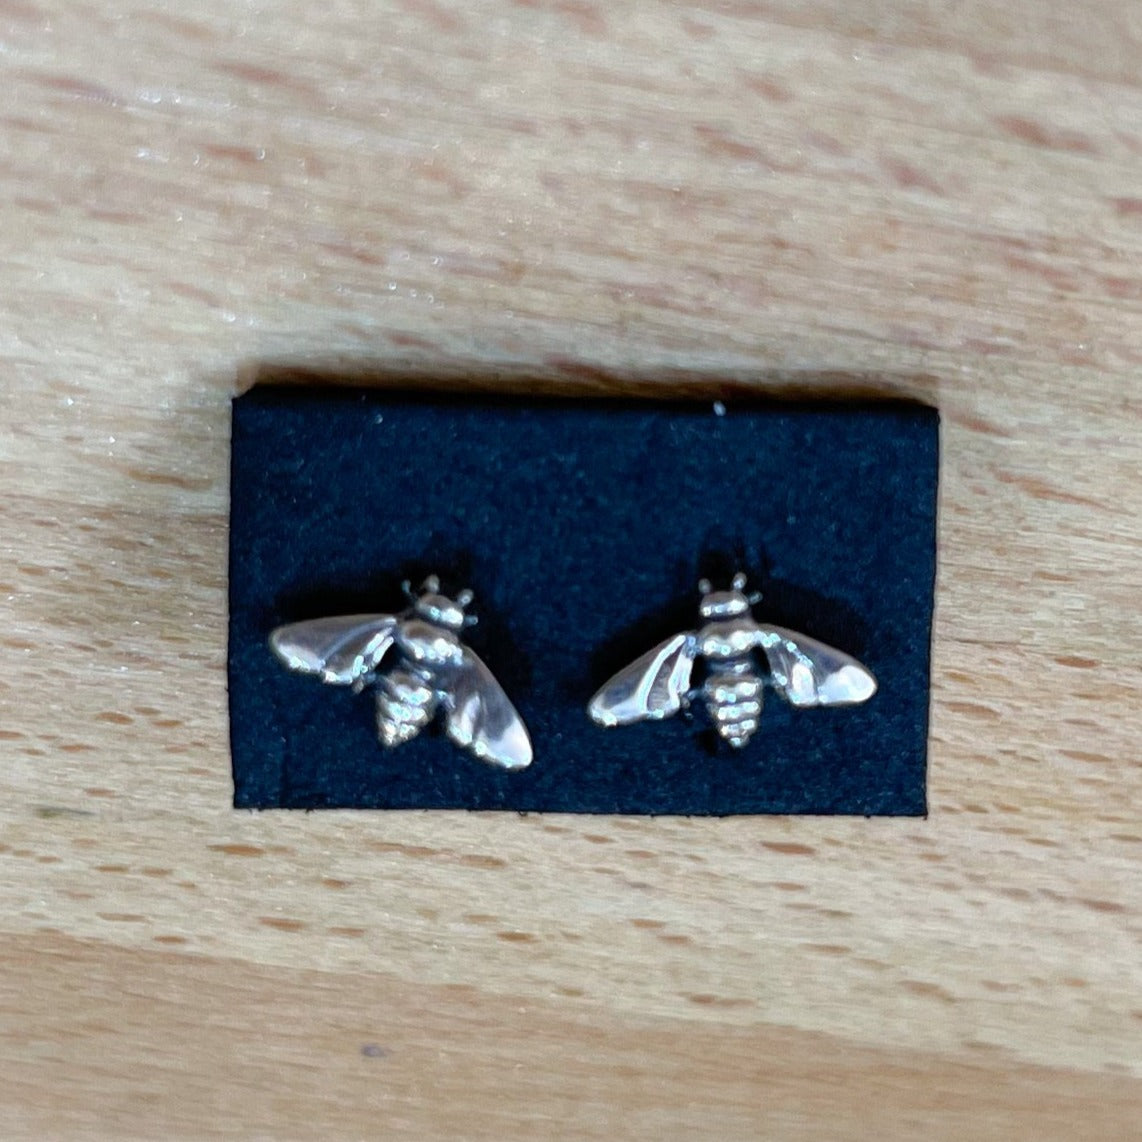 Tiny Bee Stud Earrings - The Nancy Smillie Shop - Art, Jewellery & Designer Gifts Glasgow